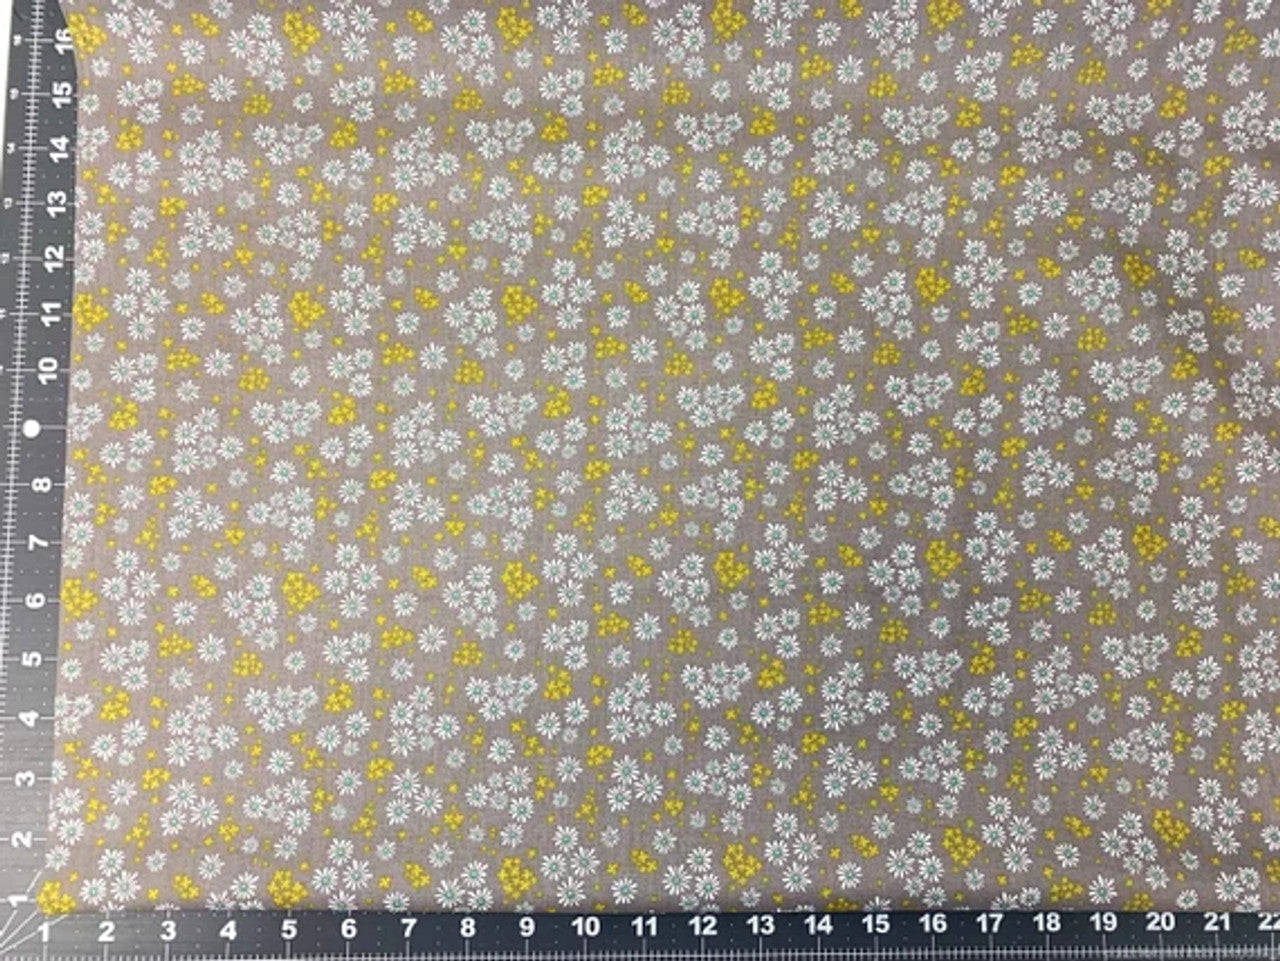 Gray Wildflower and Daisy fabric